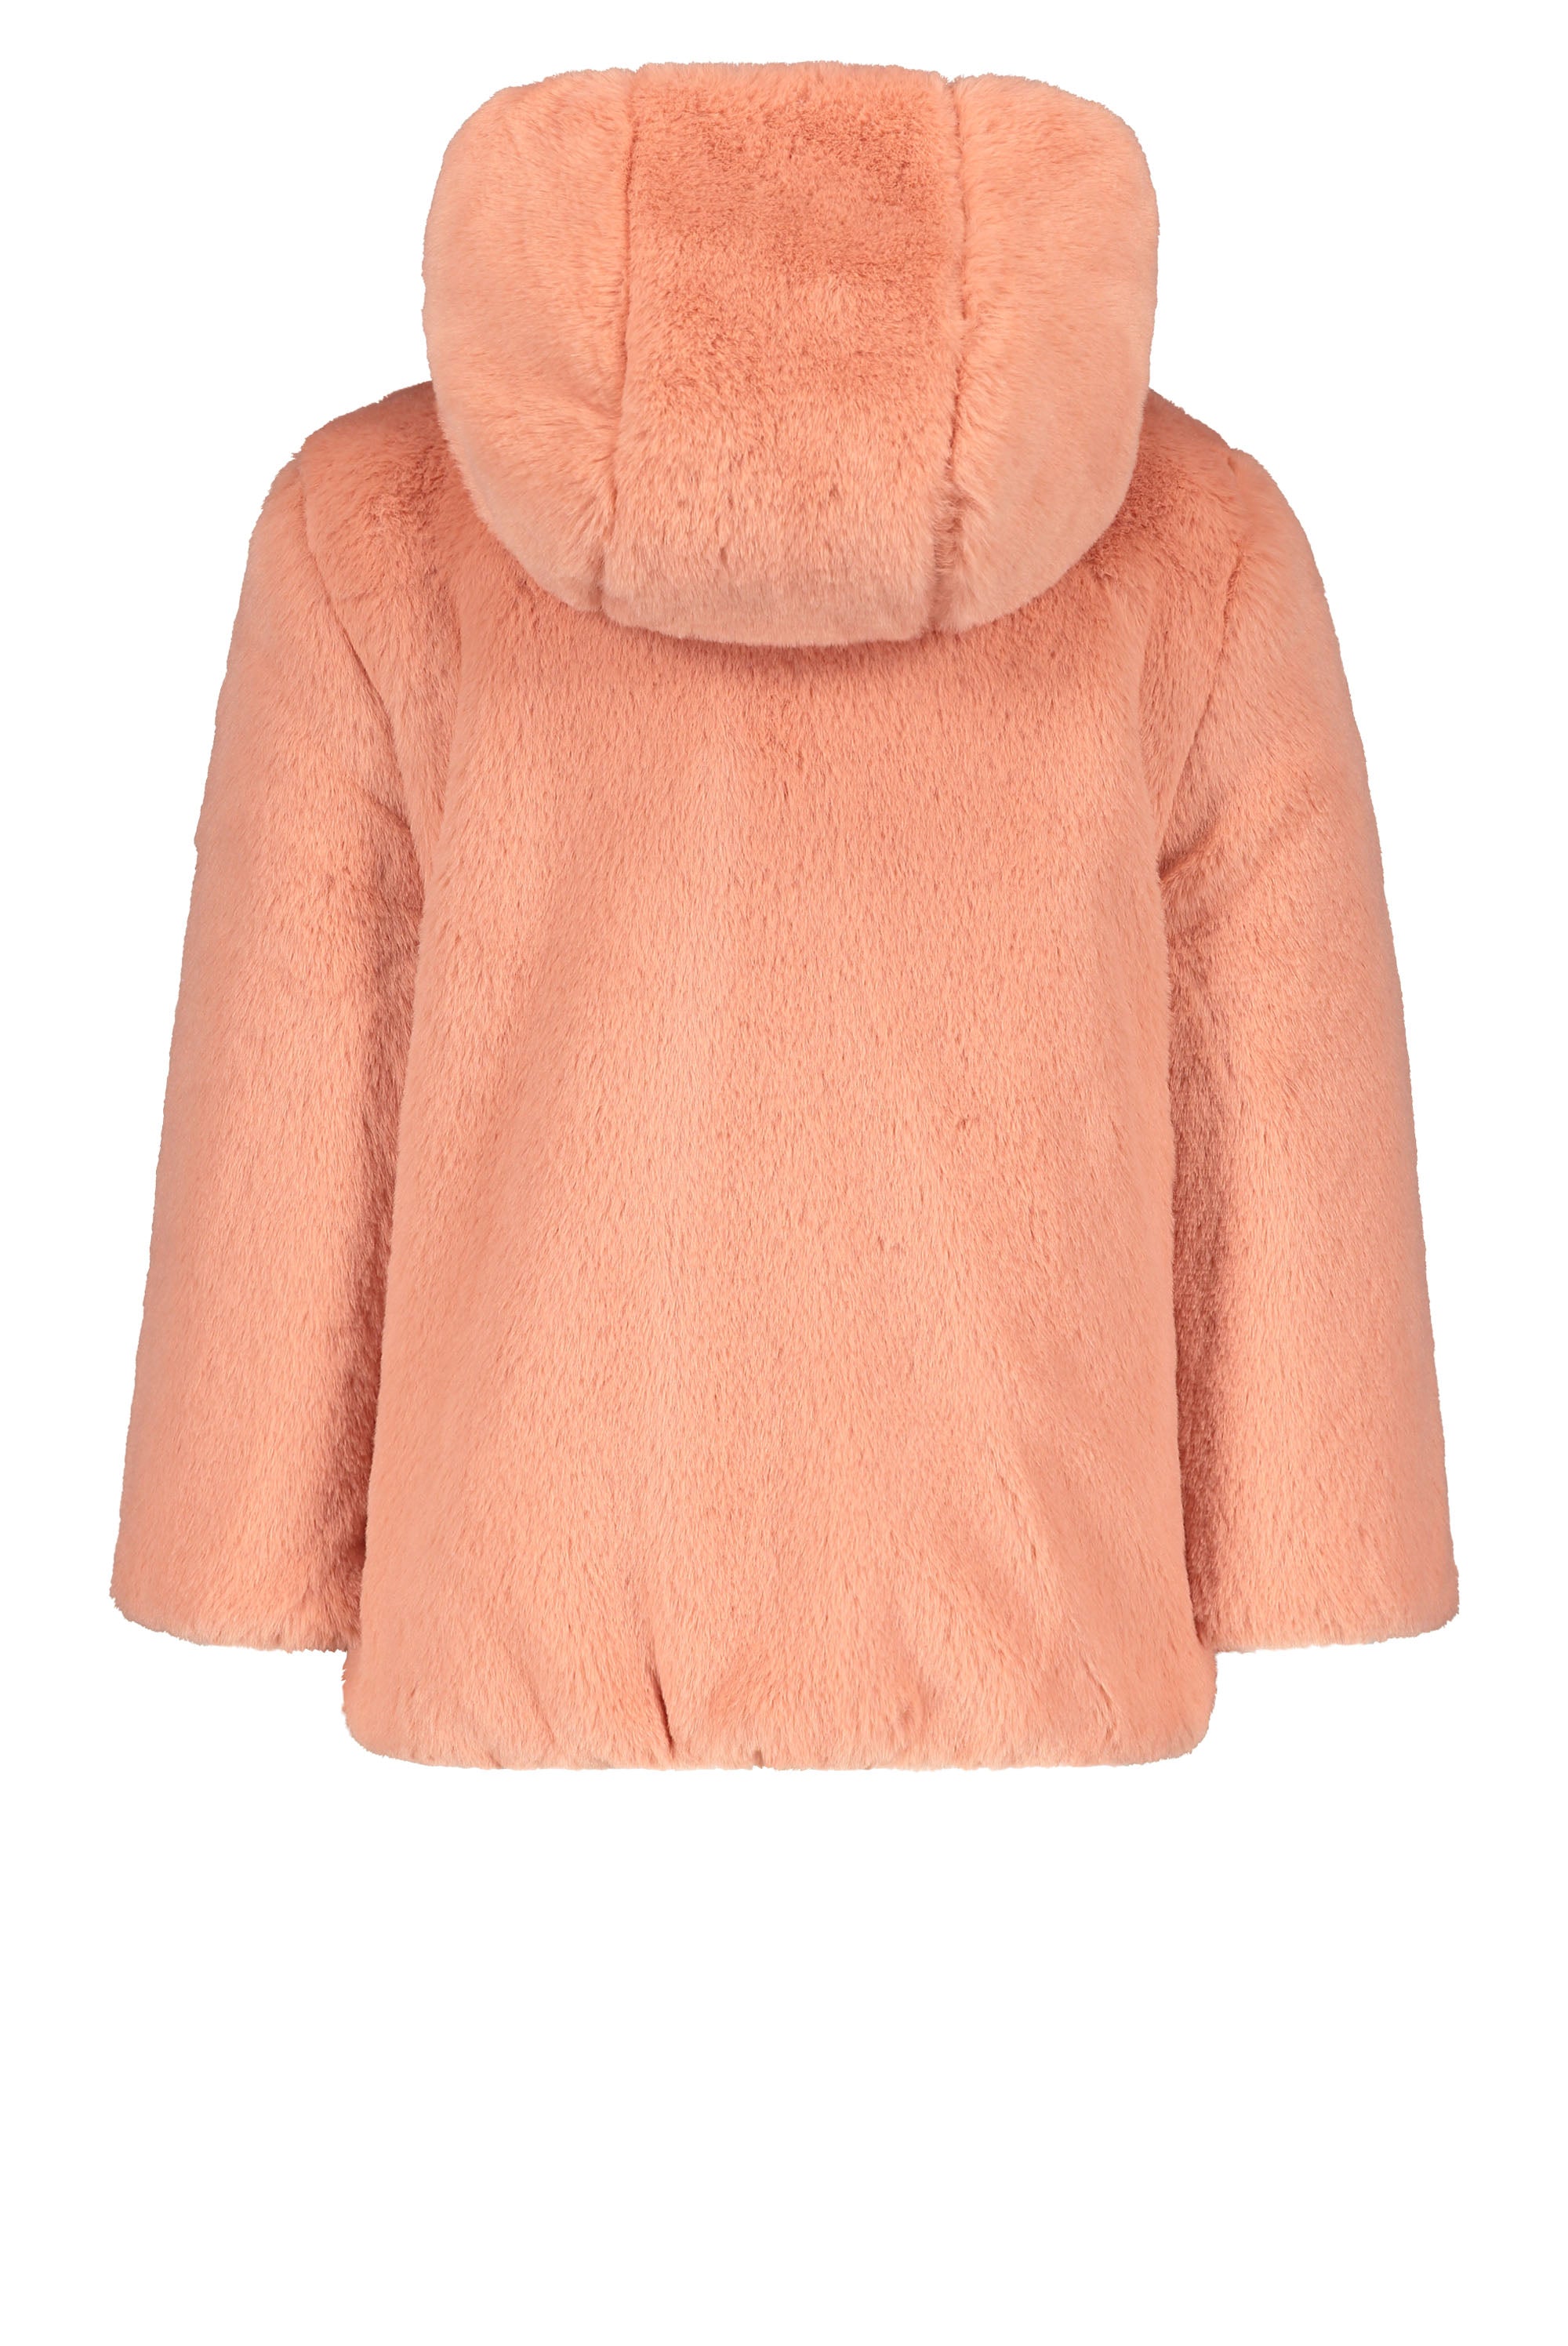 Flo Flo baby girls reversible hooded jacket pink